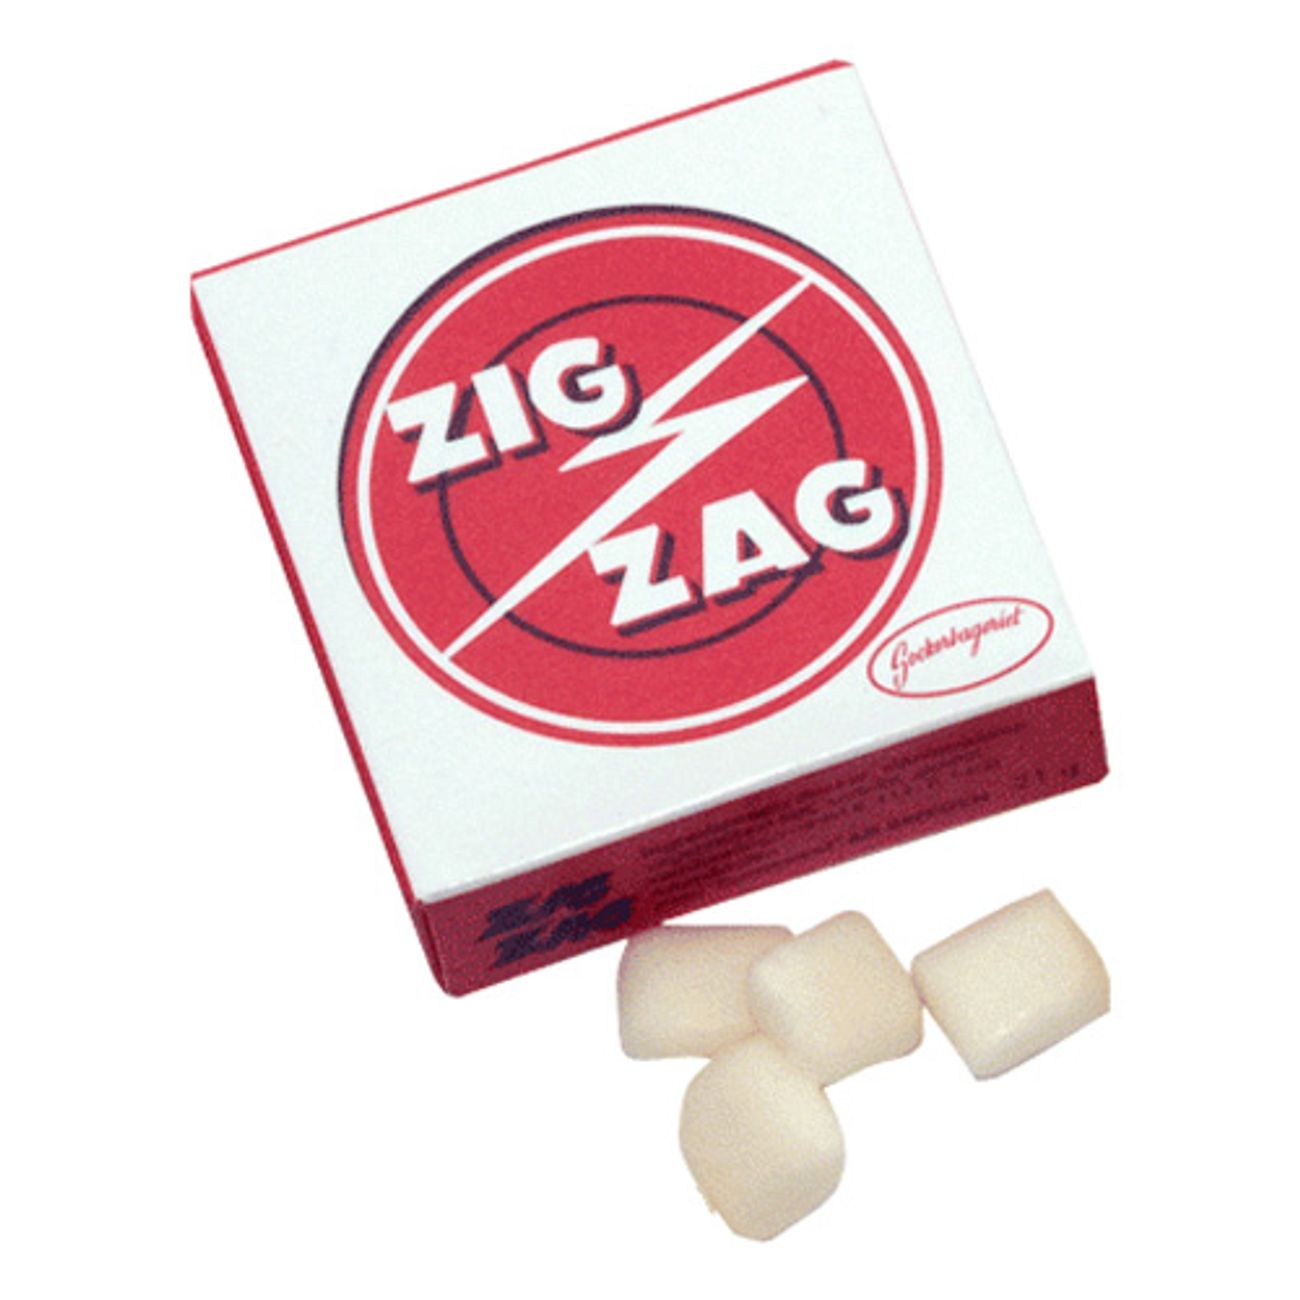 zig-zag-tablettask-1